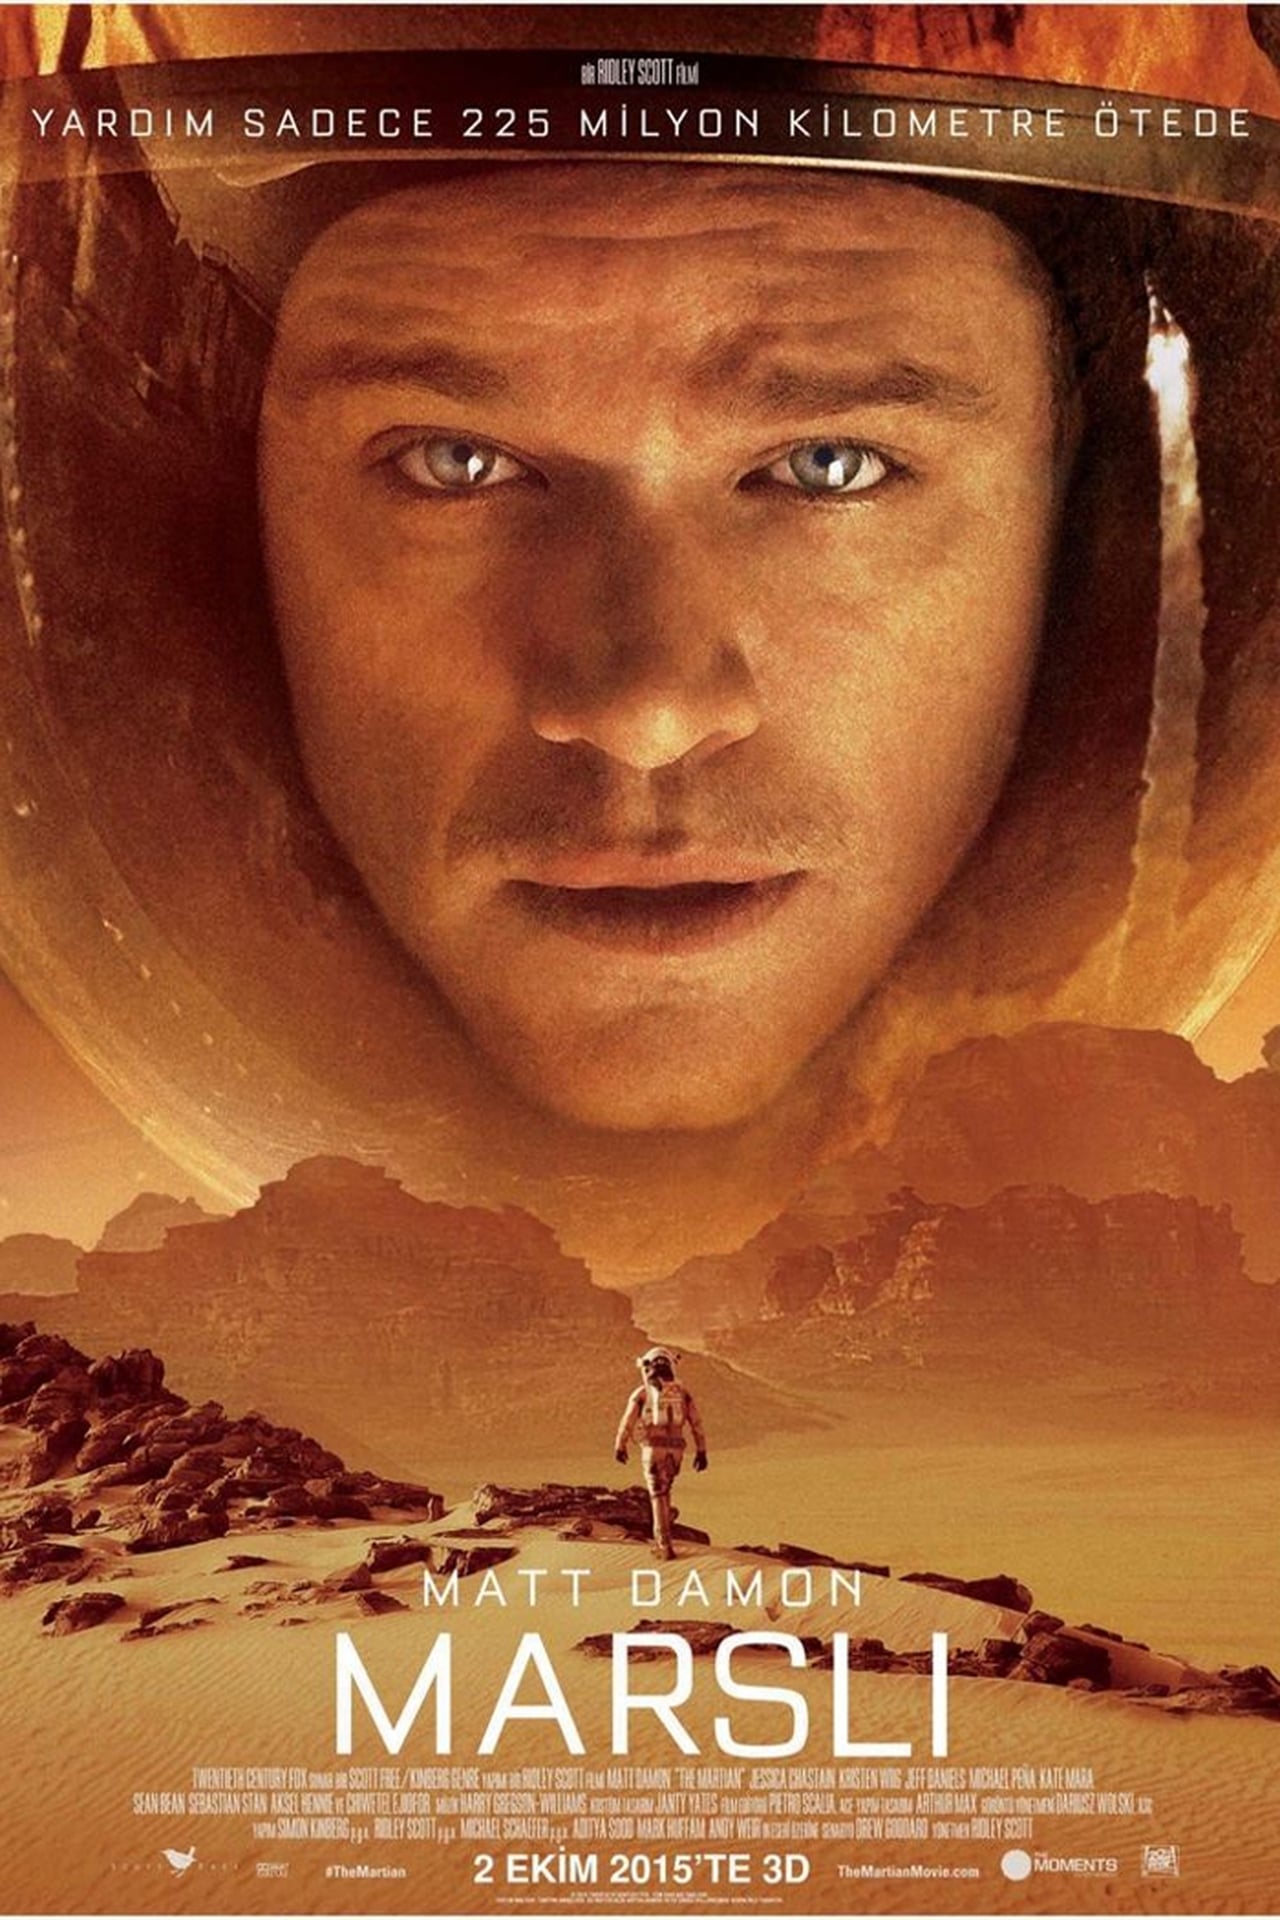 The Martian (2015) Theatrical Cut 448Kbps 23.976Fps 48Khz 5.1Ch BluRay Turkish Audio TAC